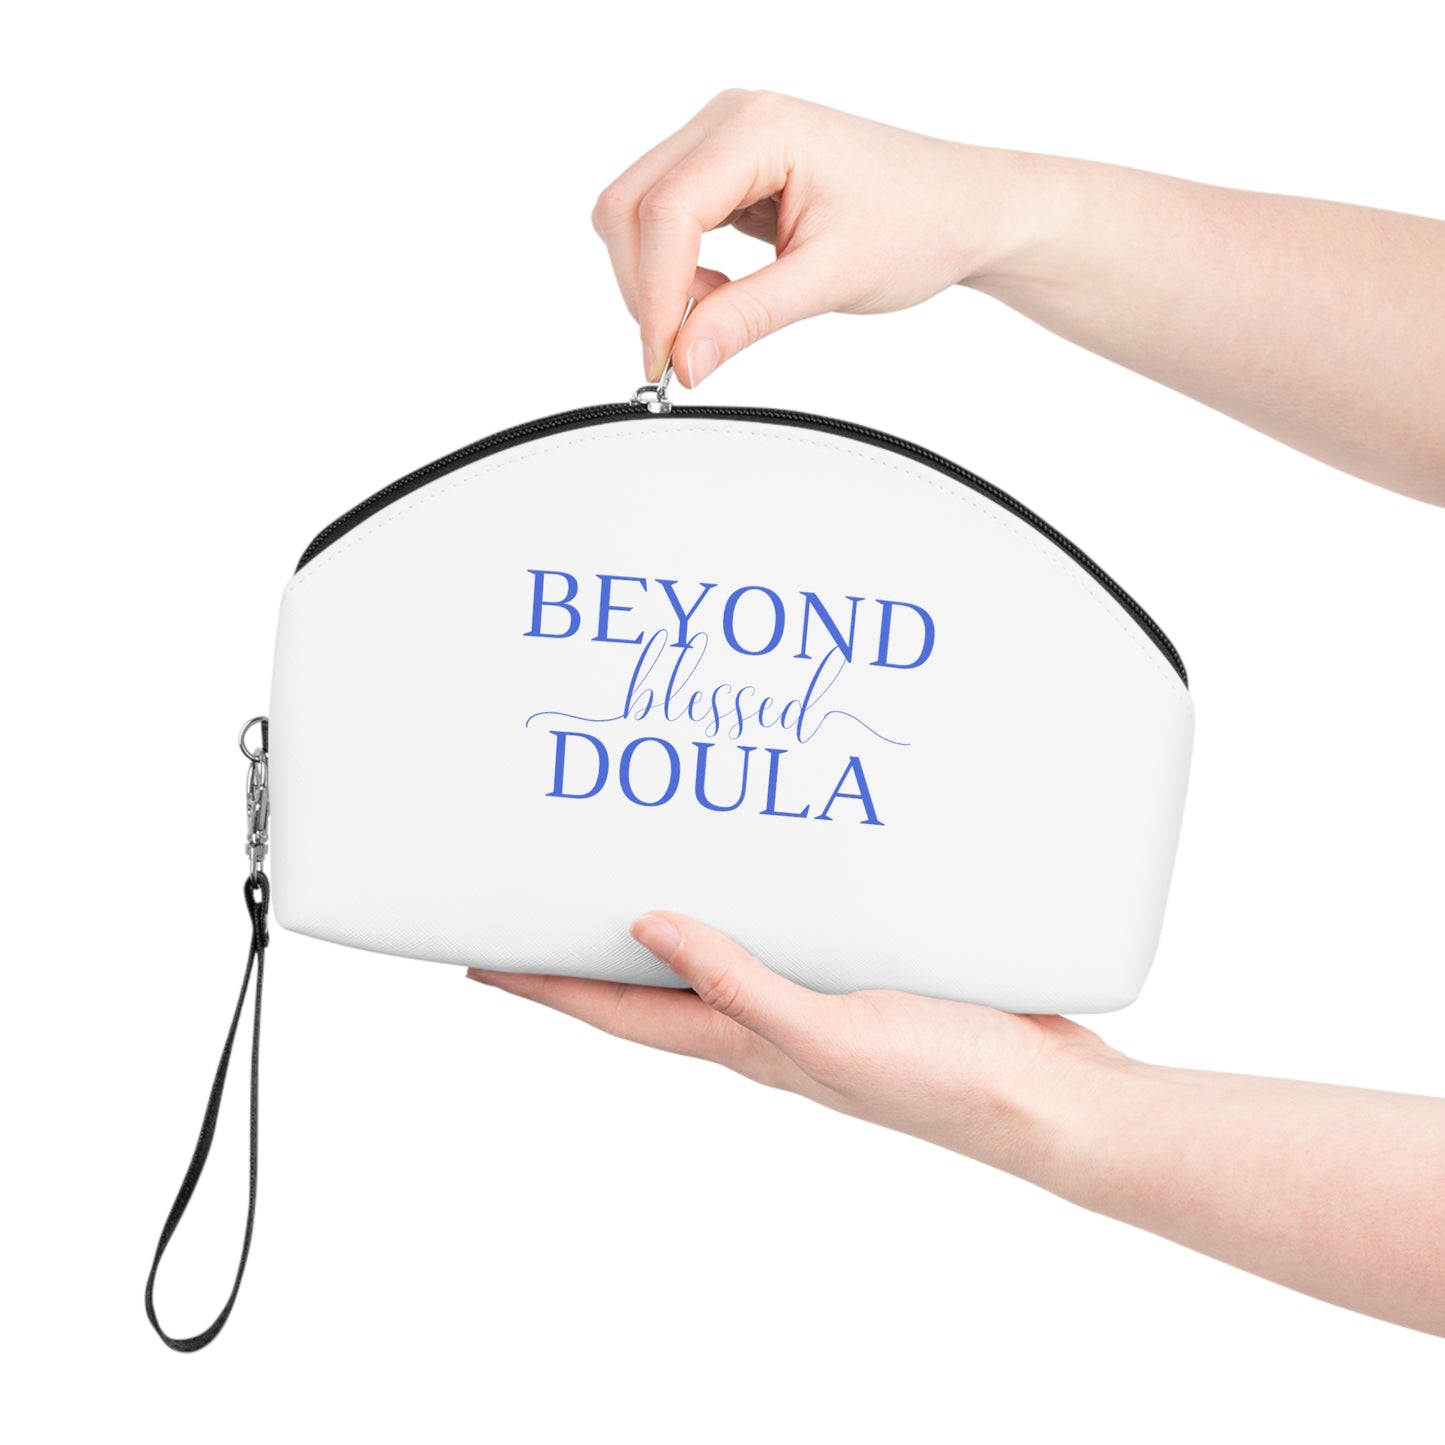 Beyond Blessed Doula - Makeup Bag - Royal Blue